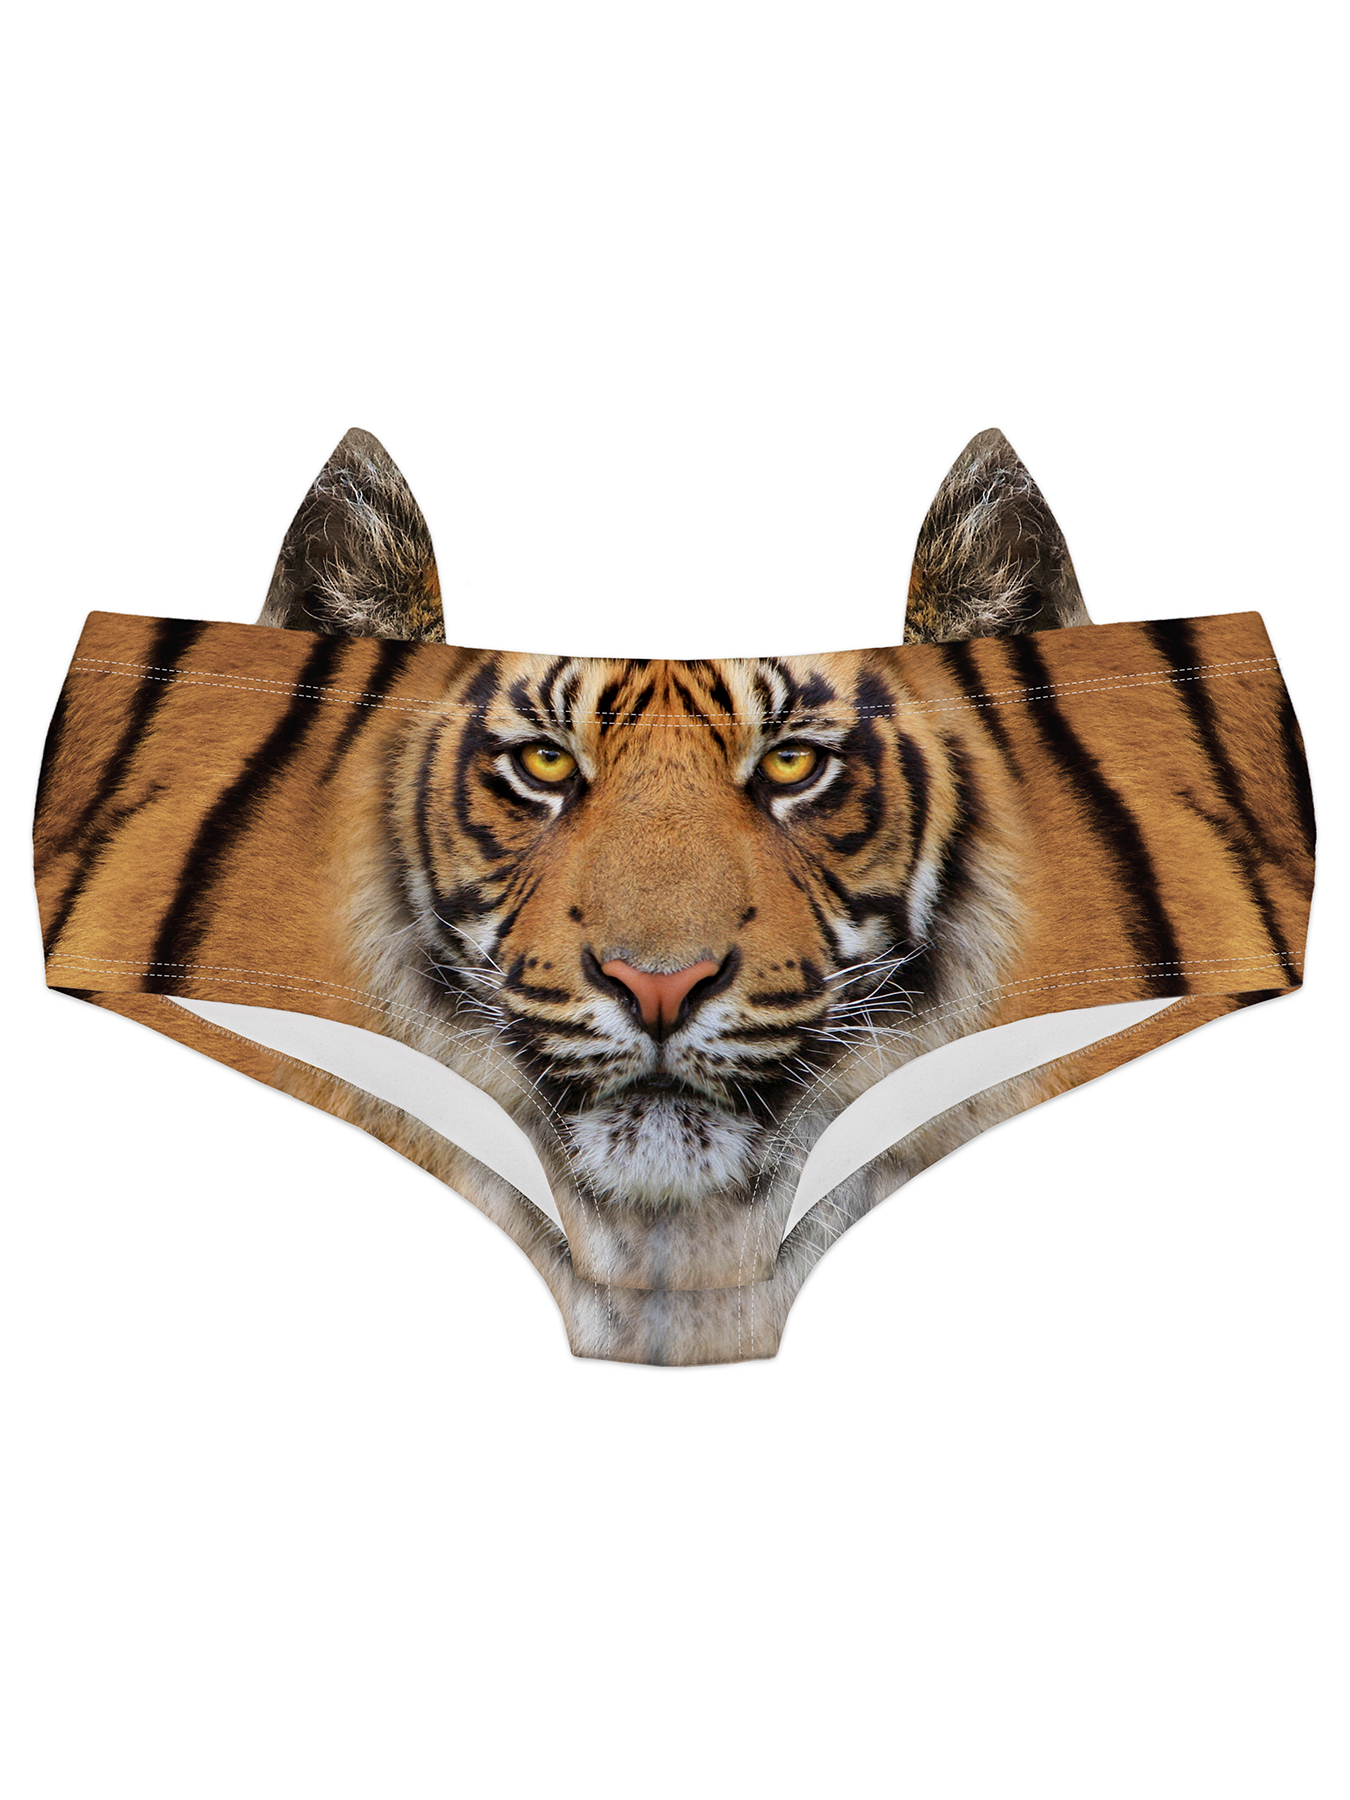 Tiger Panties for Women